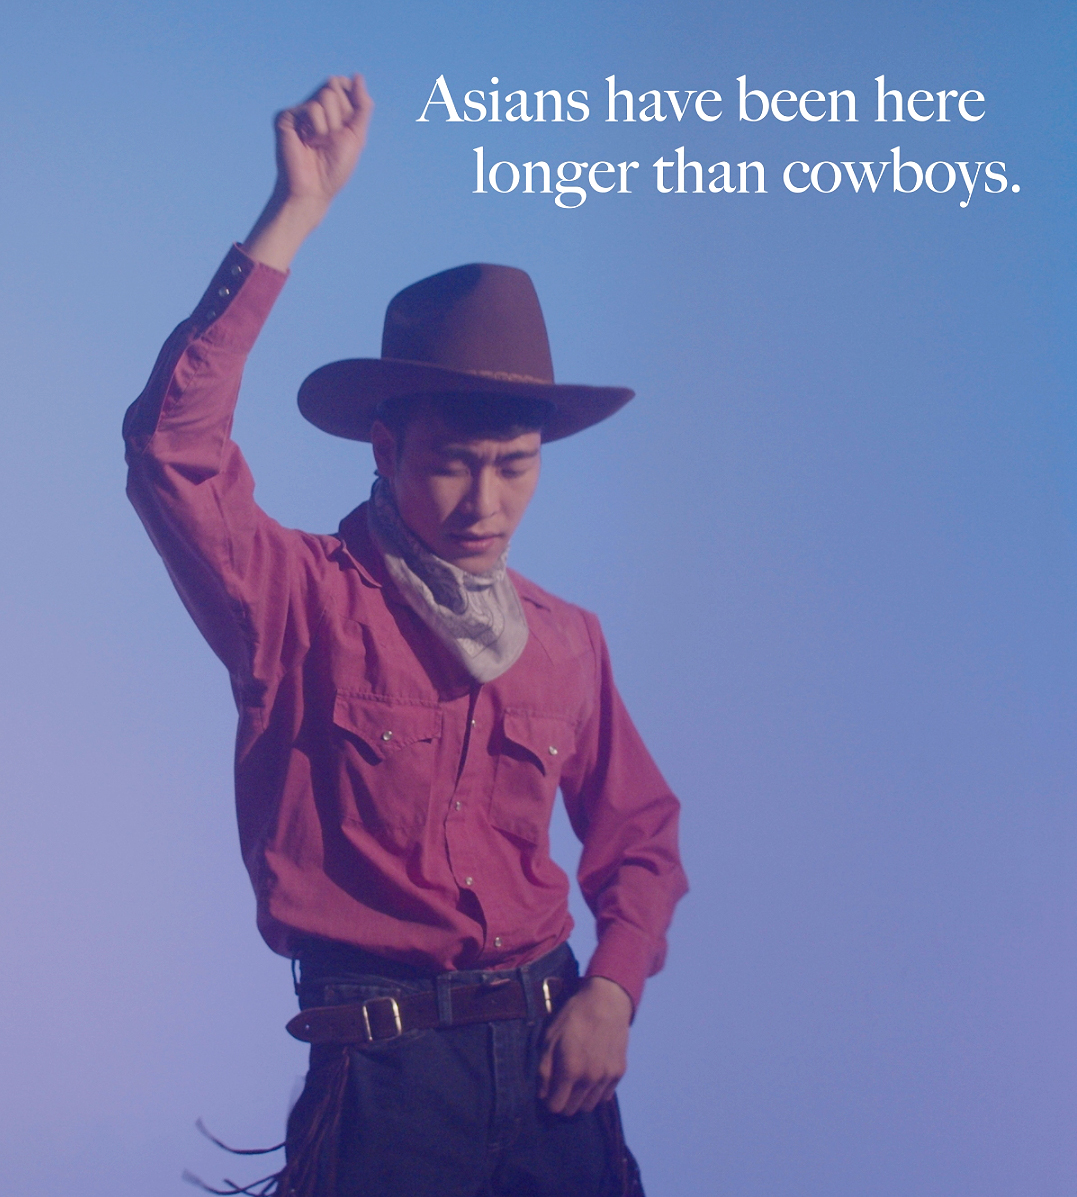 image of an Asian man posing as a cowboy